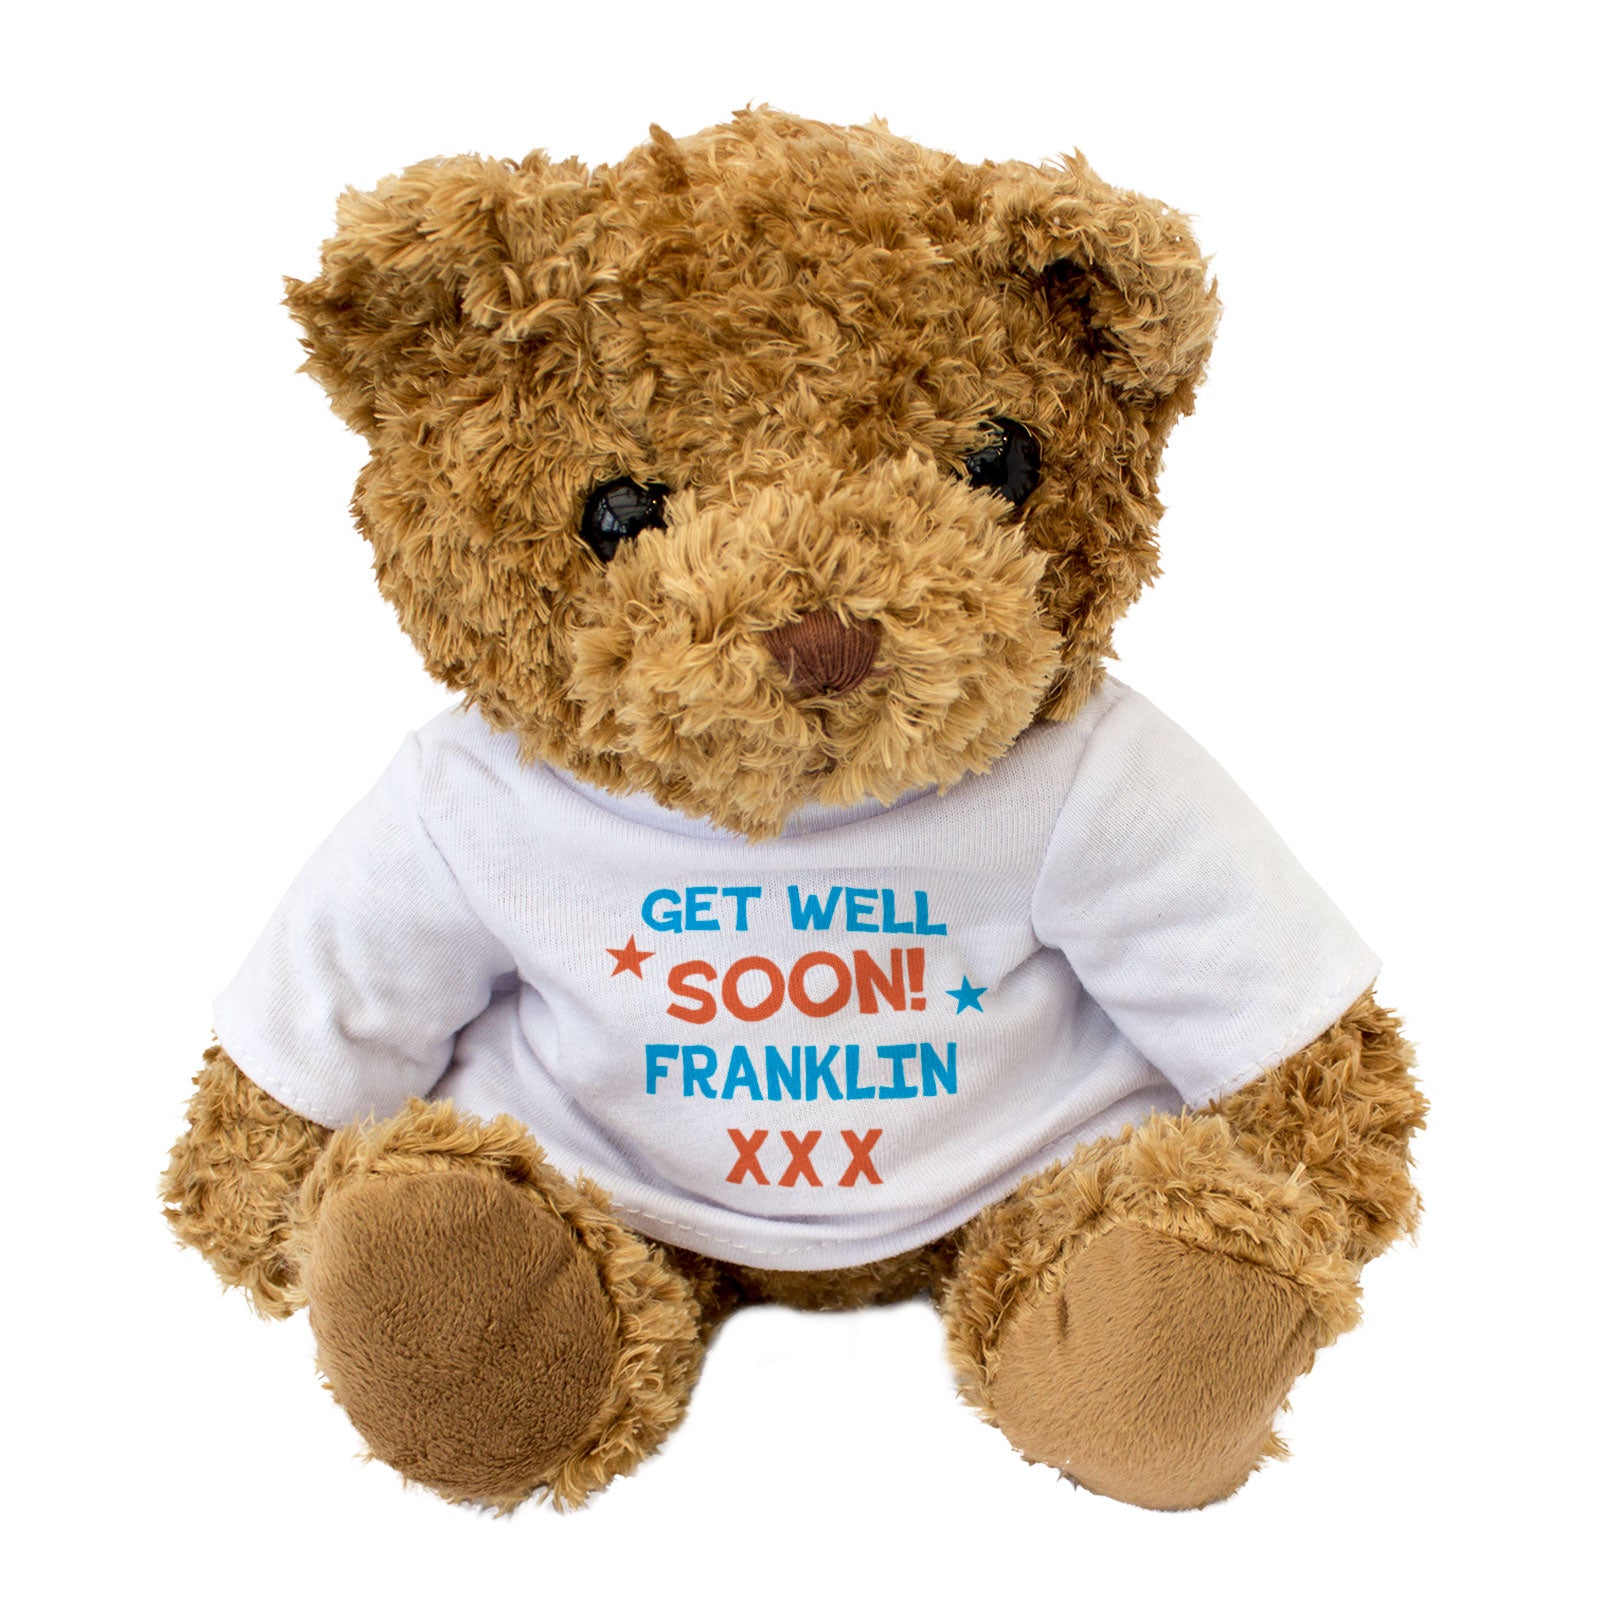 Get Well Soon Franklin - Teddy Bear